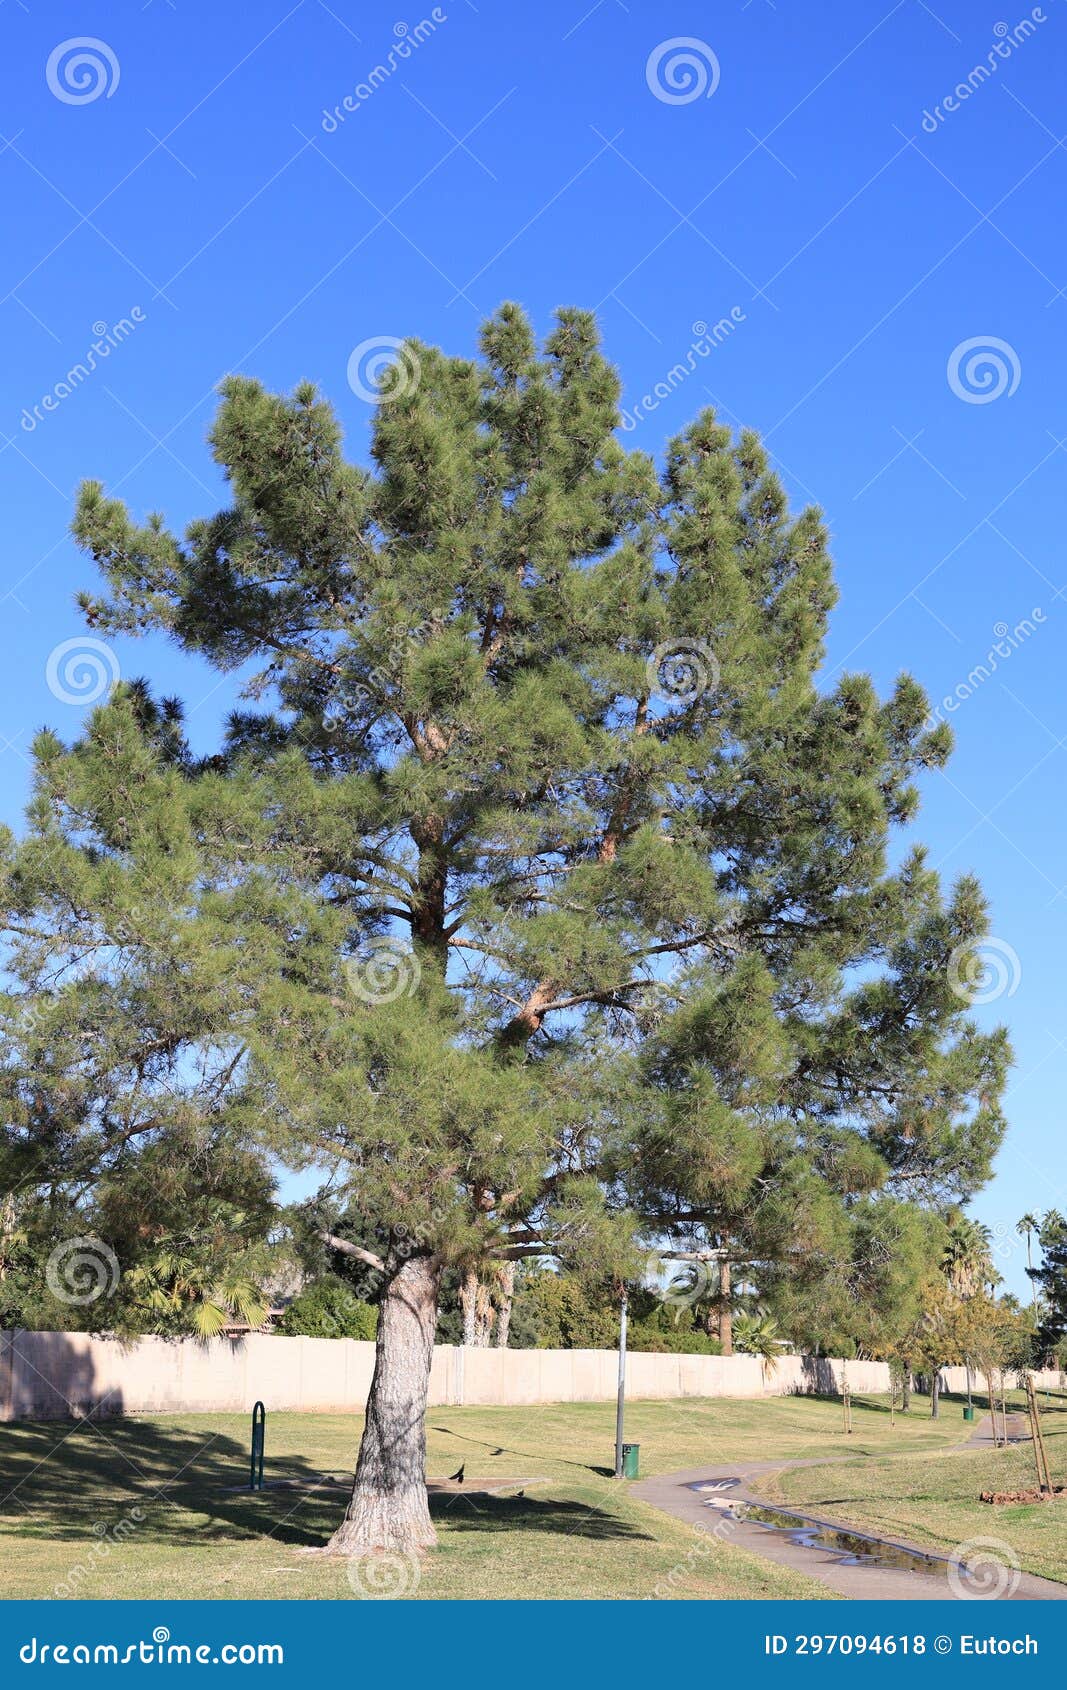 afgan pine tree in arizona (eldarica pine)